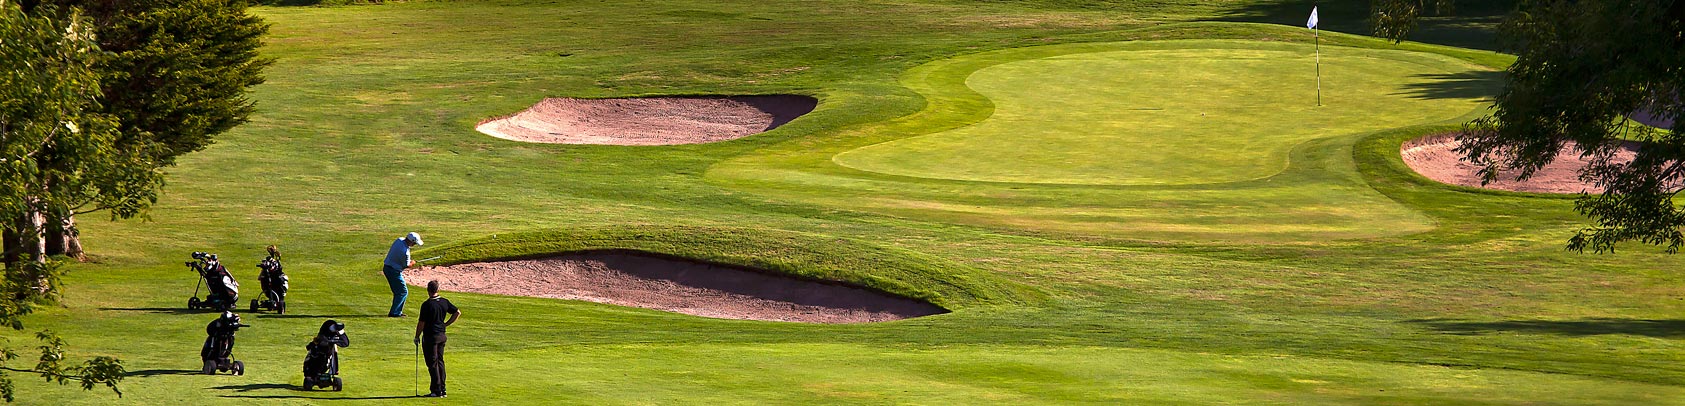 Golf Club Cardiff, Practice Green Wales